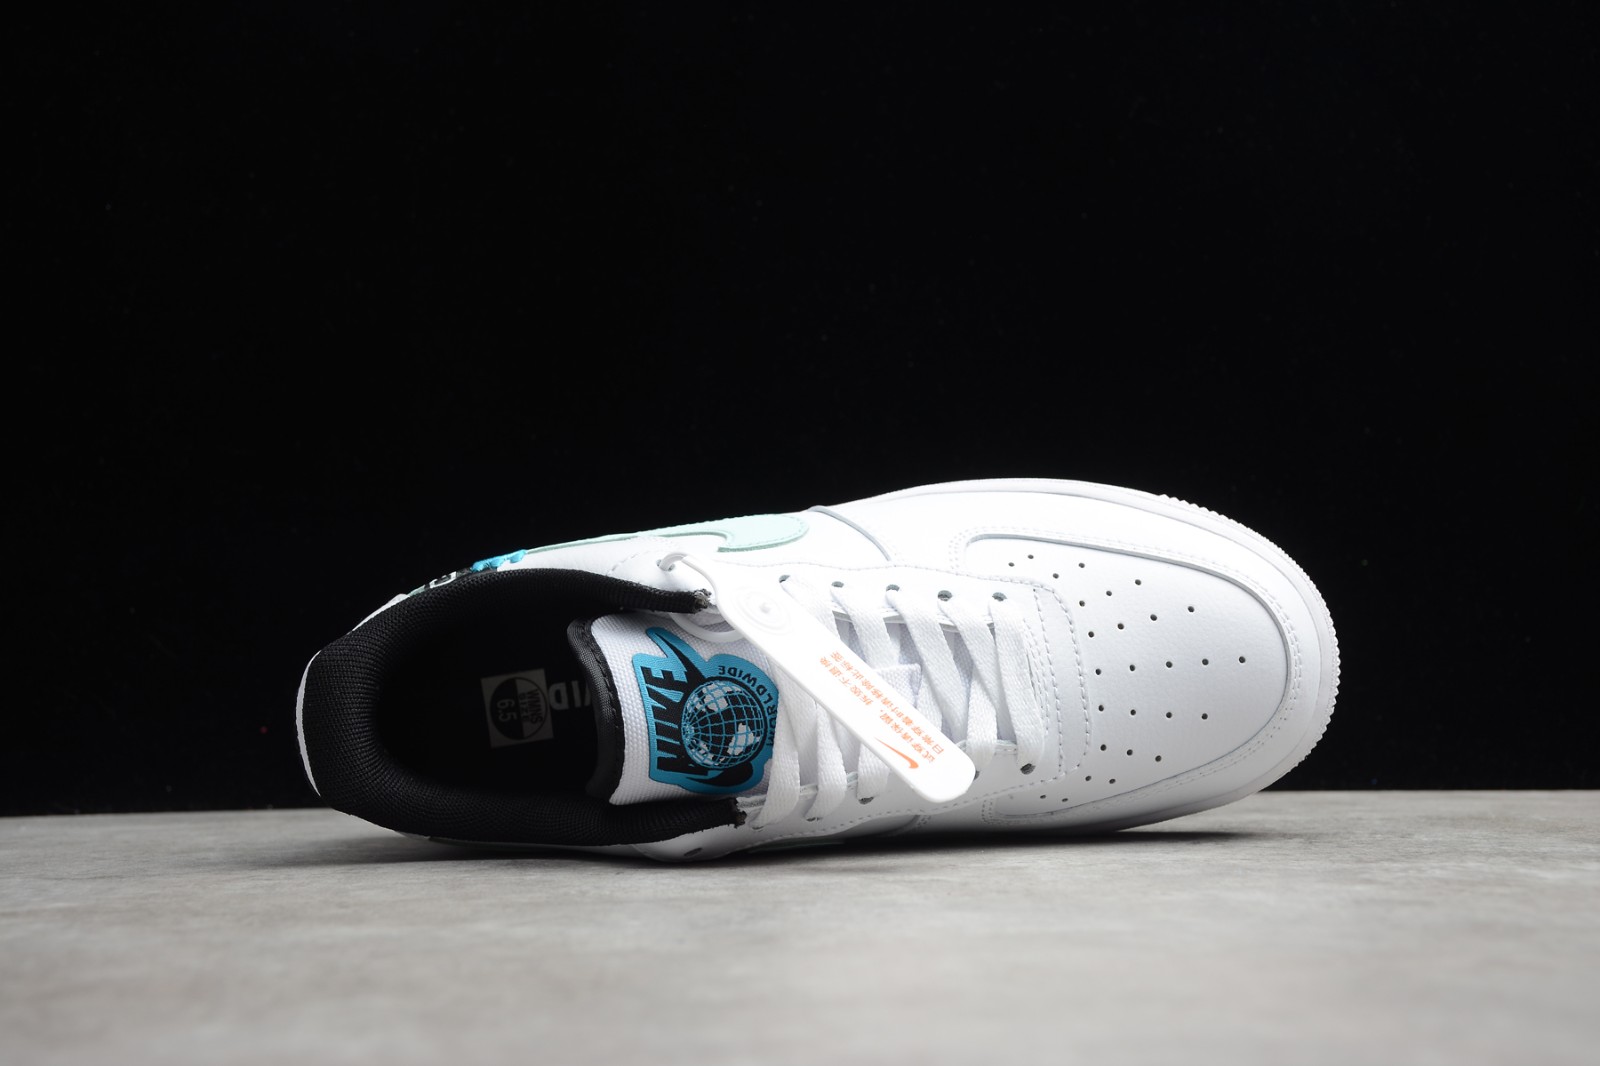  Nike Men's Shoes Air Force 1 '07 LV8 Worldwide Pack - Glacier  Blue CK6924-100 (Numeric_9_Point_5)